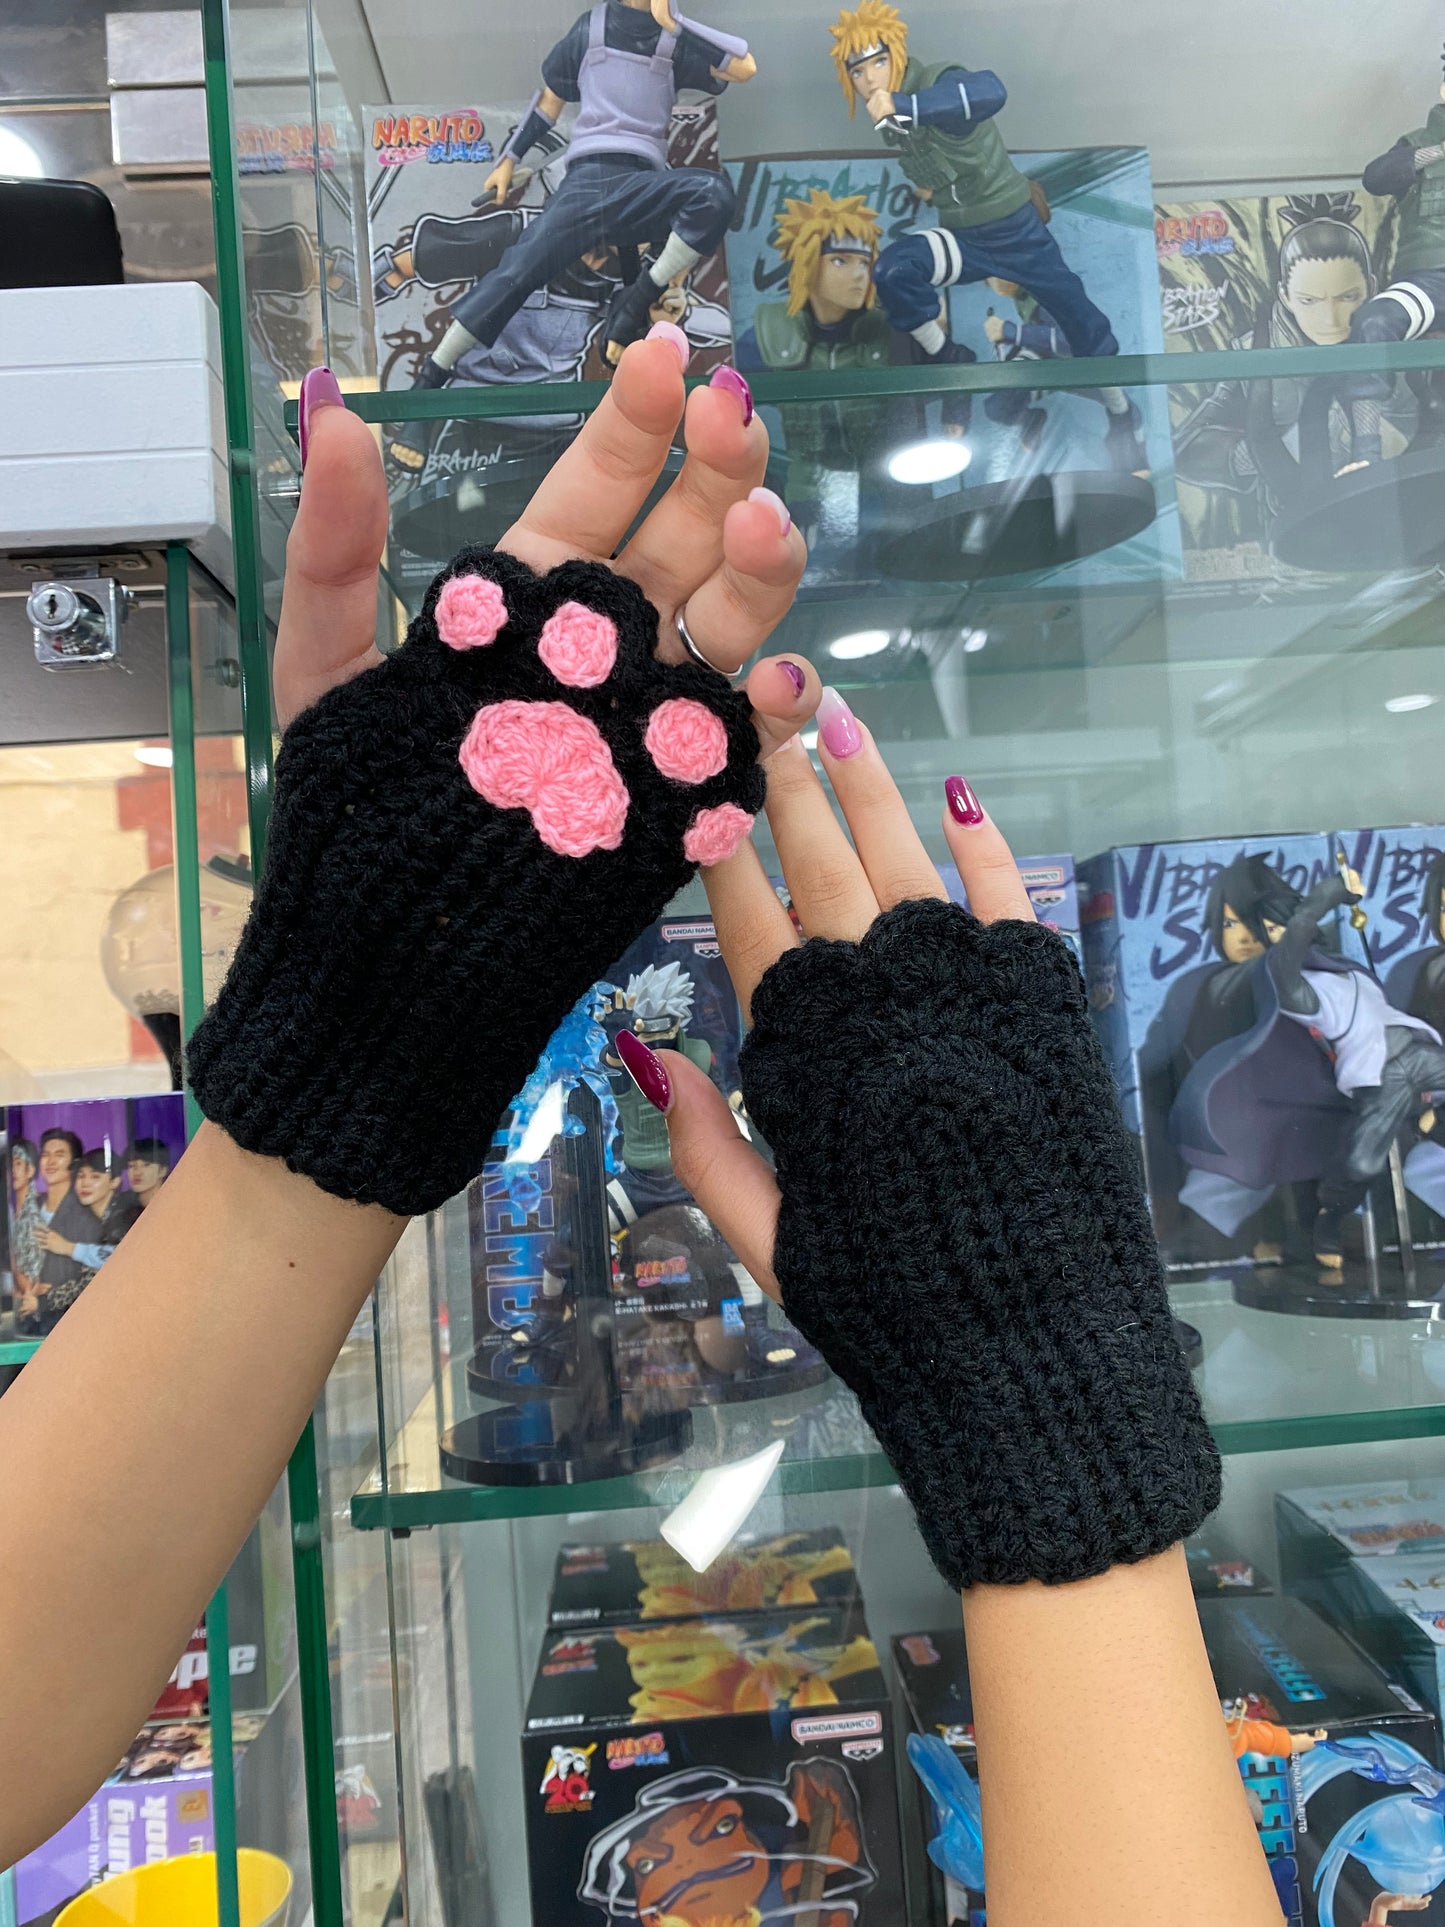 Cat Gloves